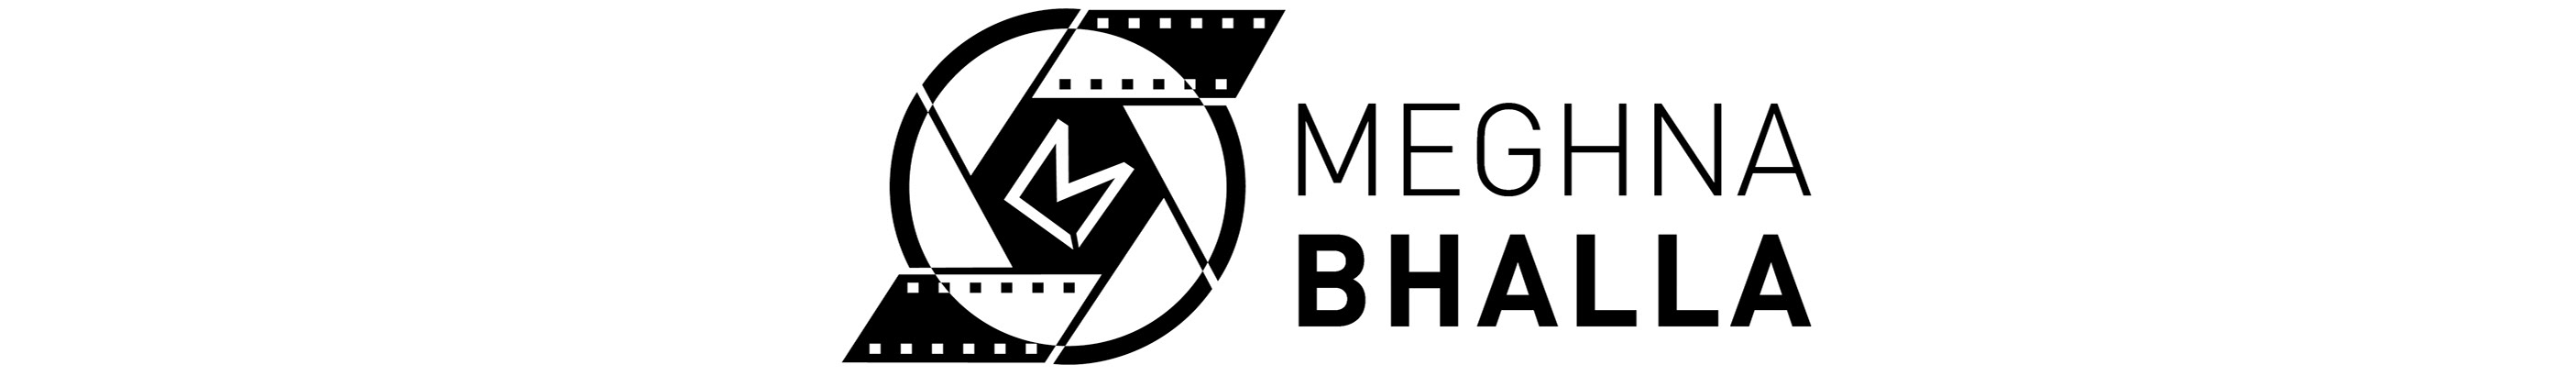 Баннер профиля Meghna Bhalla